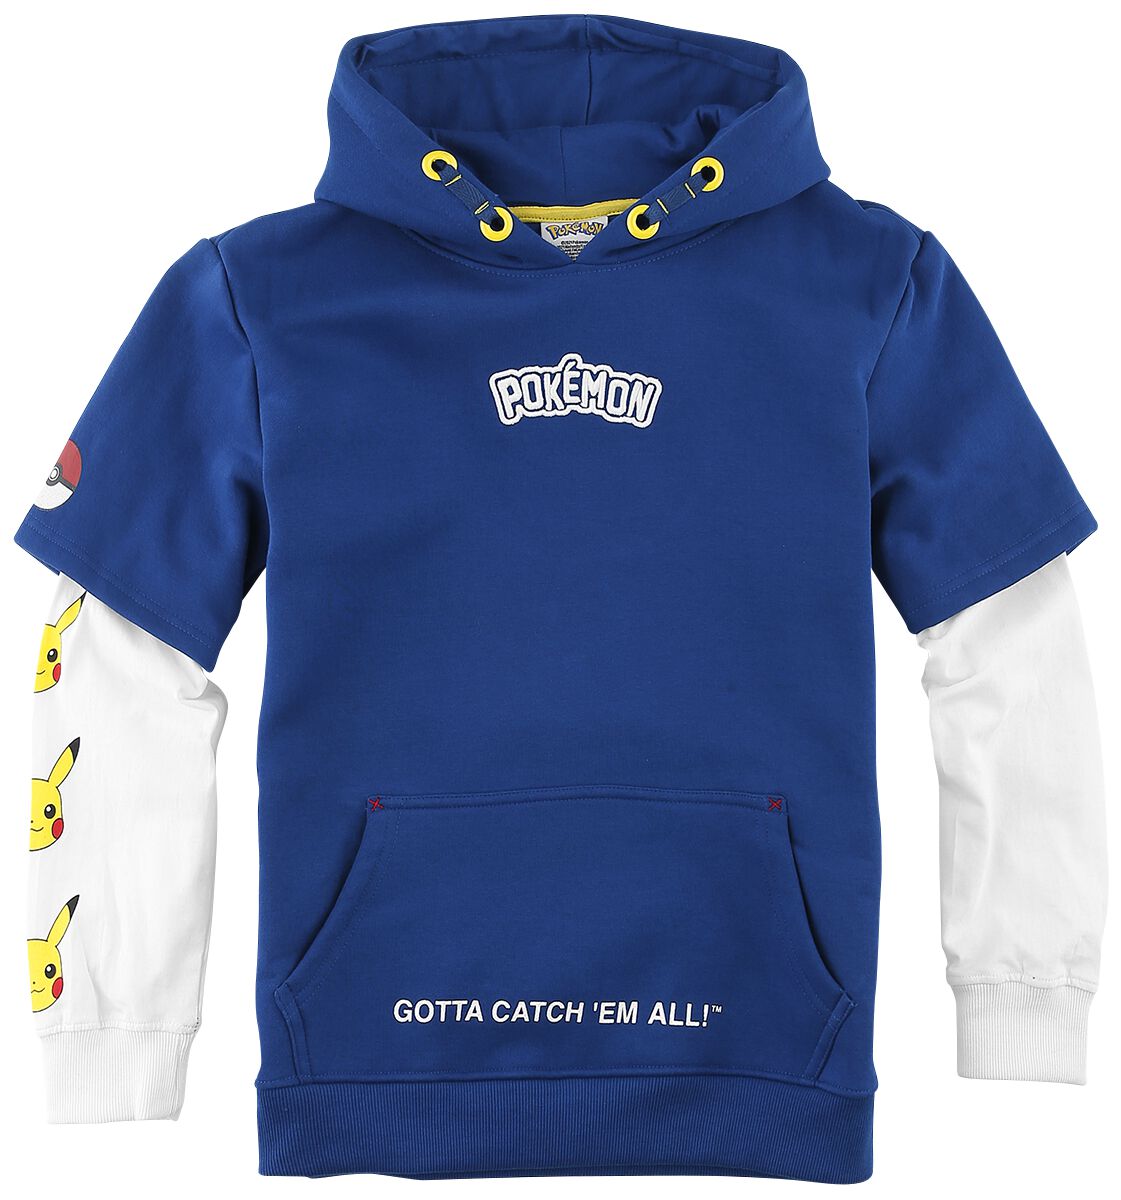 Pokémon Kids - Got Them All Hoodie Sweater blue